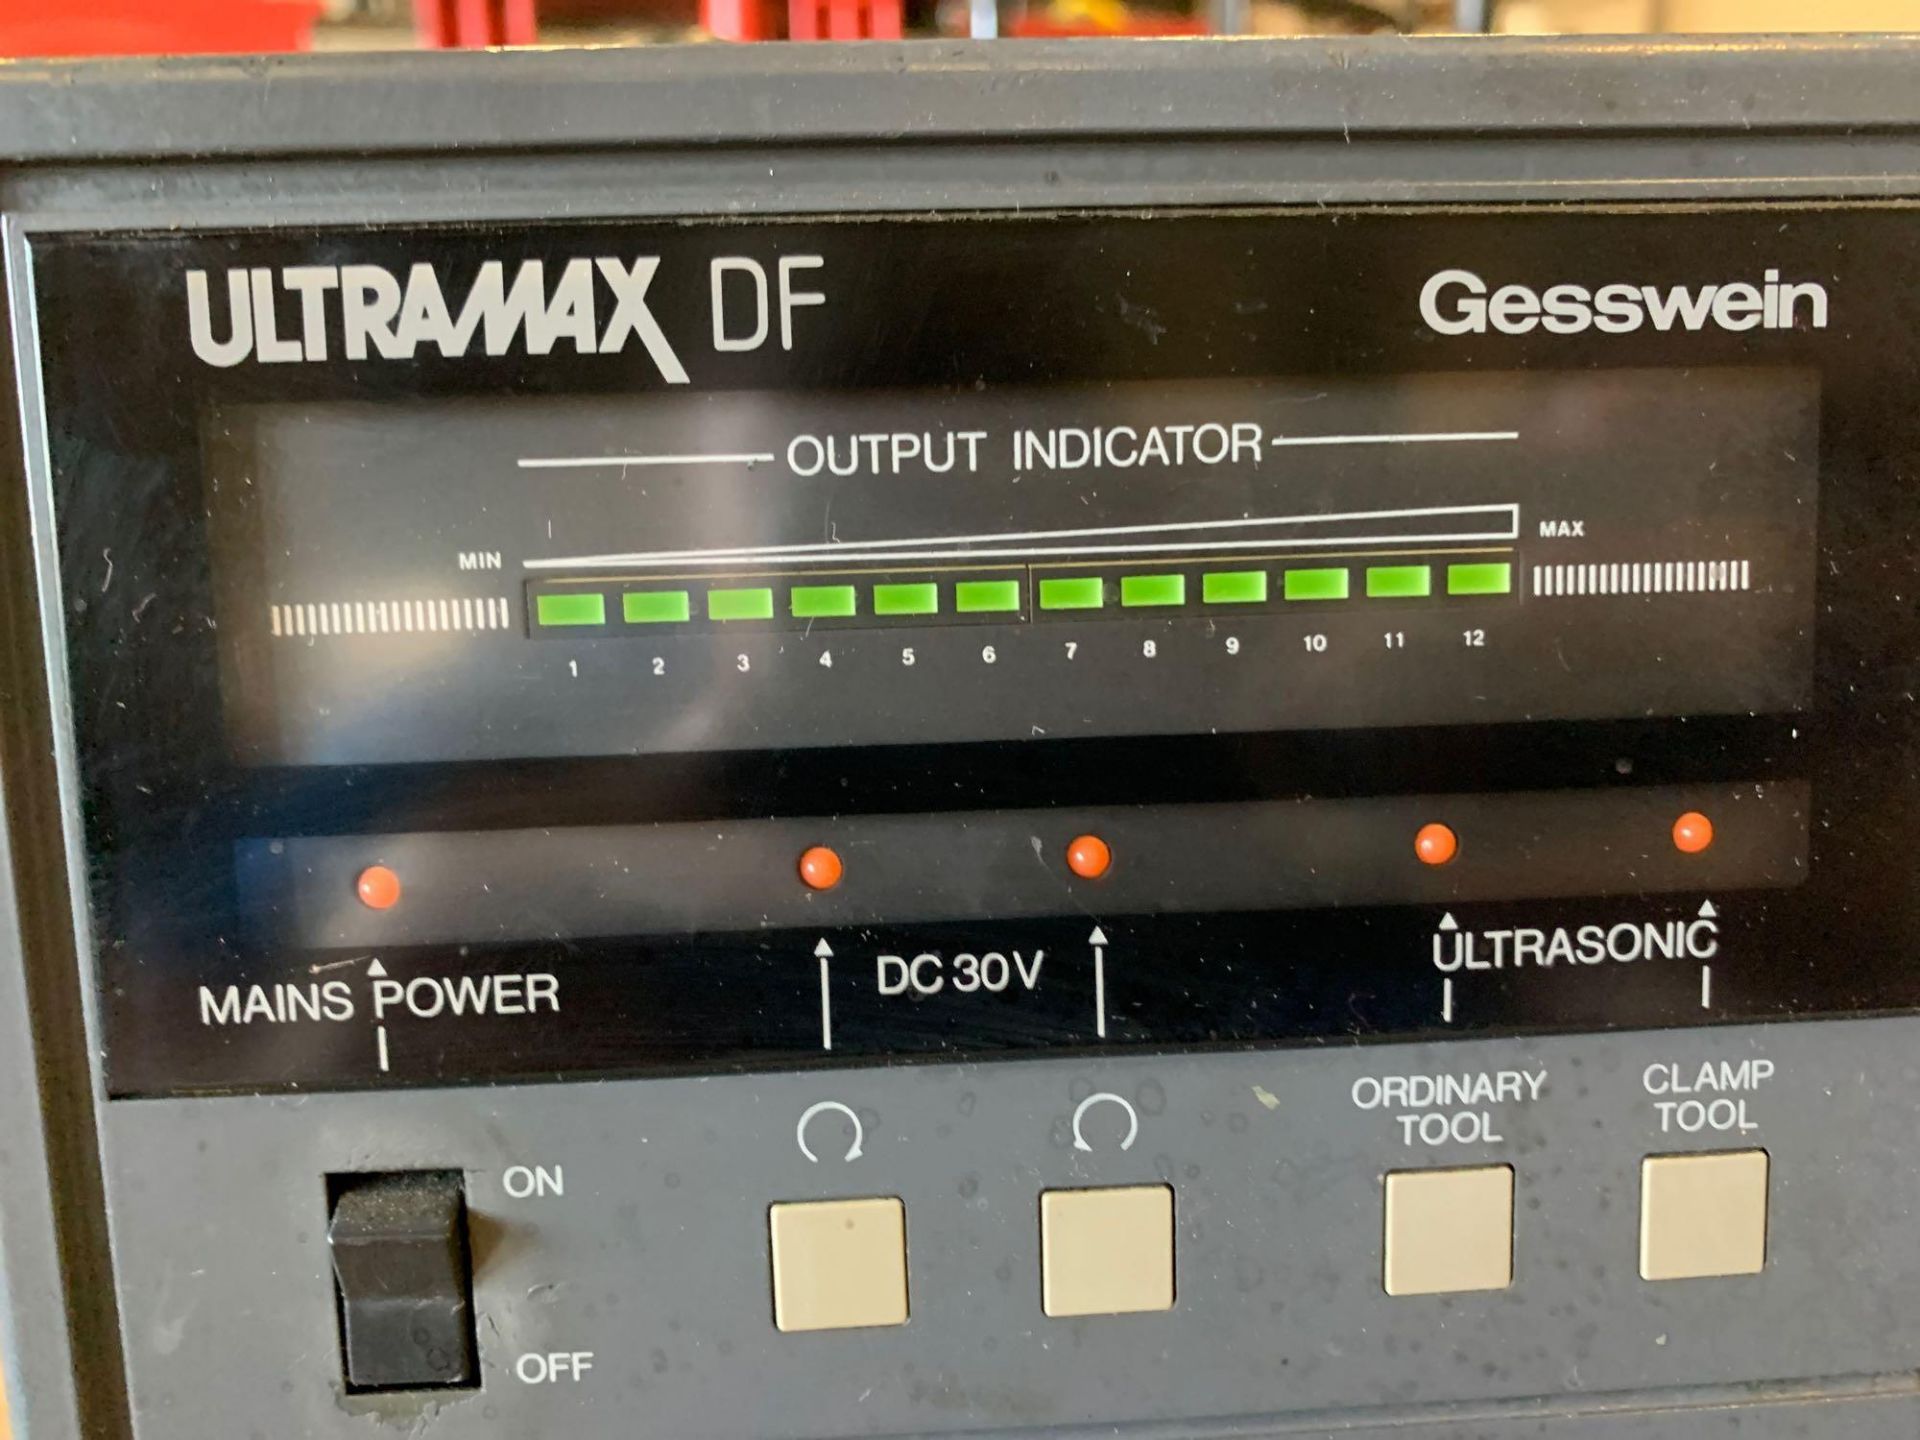 Ultramax DF Gesswein Output Indicator Sonotec, 115V, DC 30V, s/n: M52-0485 - Image 5 of 7